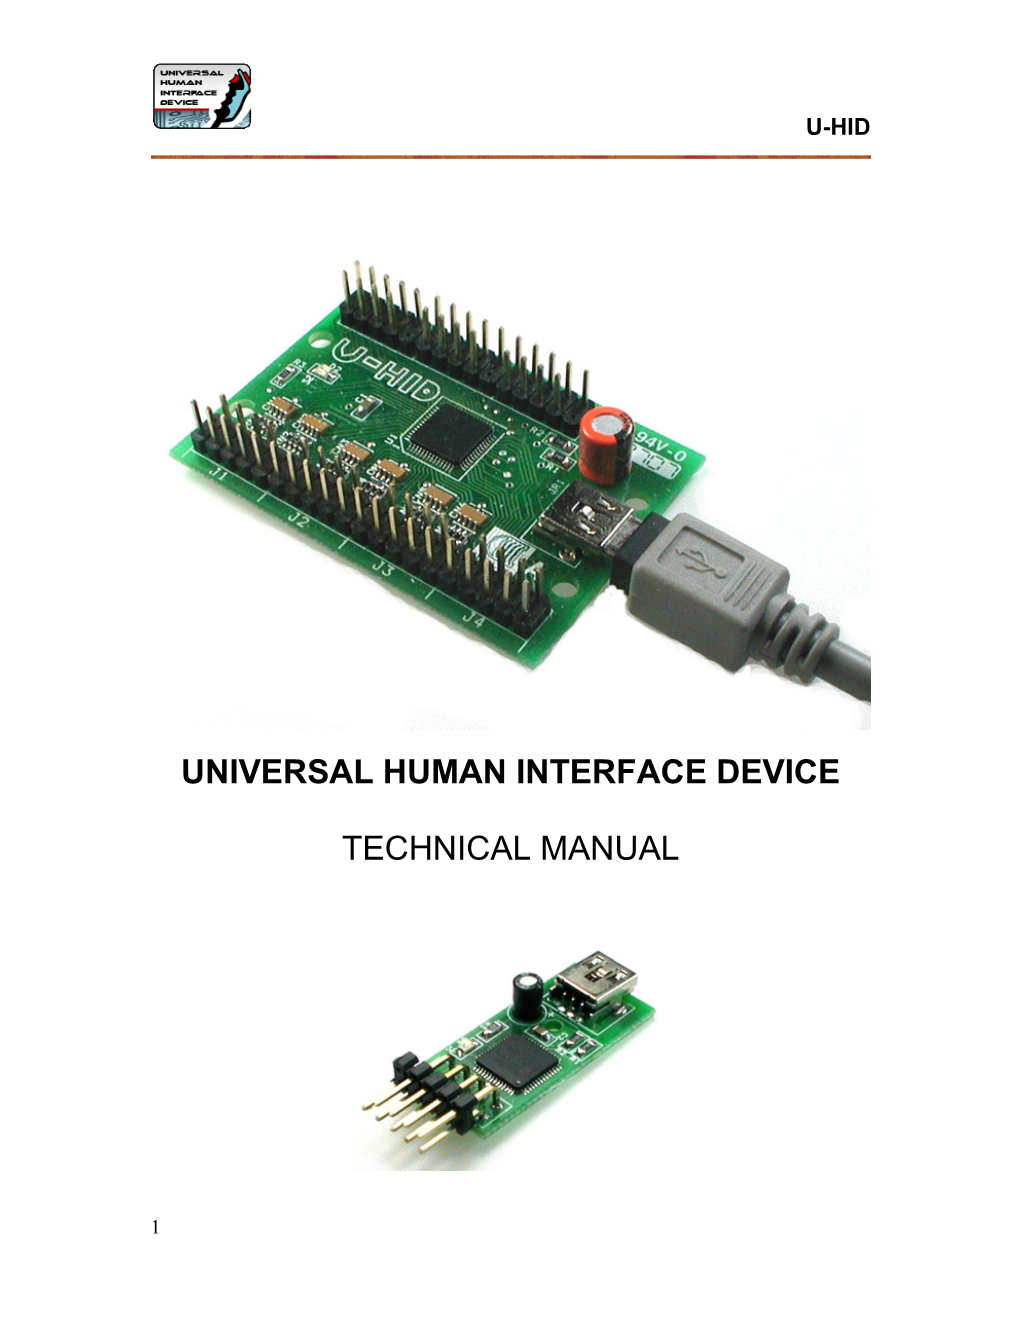 Universal Human Interface Device Technical Manual